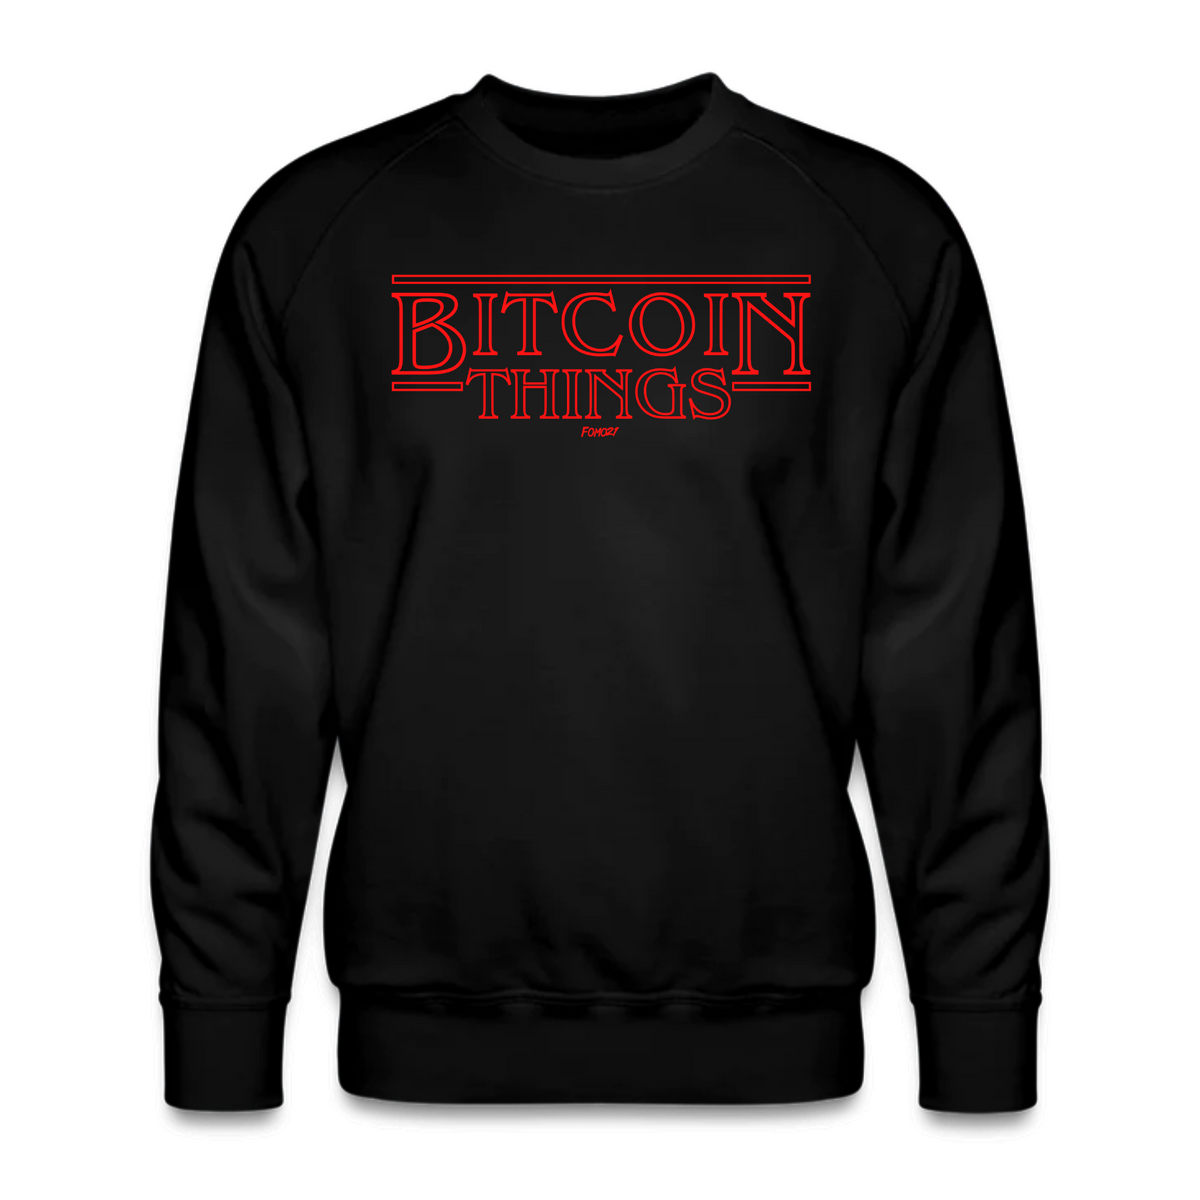 Bitcoin Things Crewneck Sweatshirt - fomo21